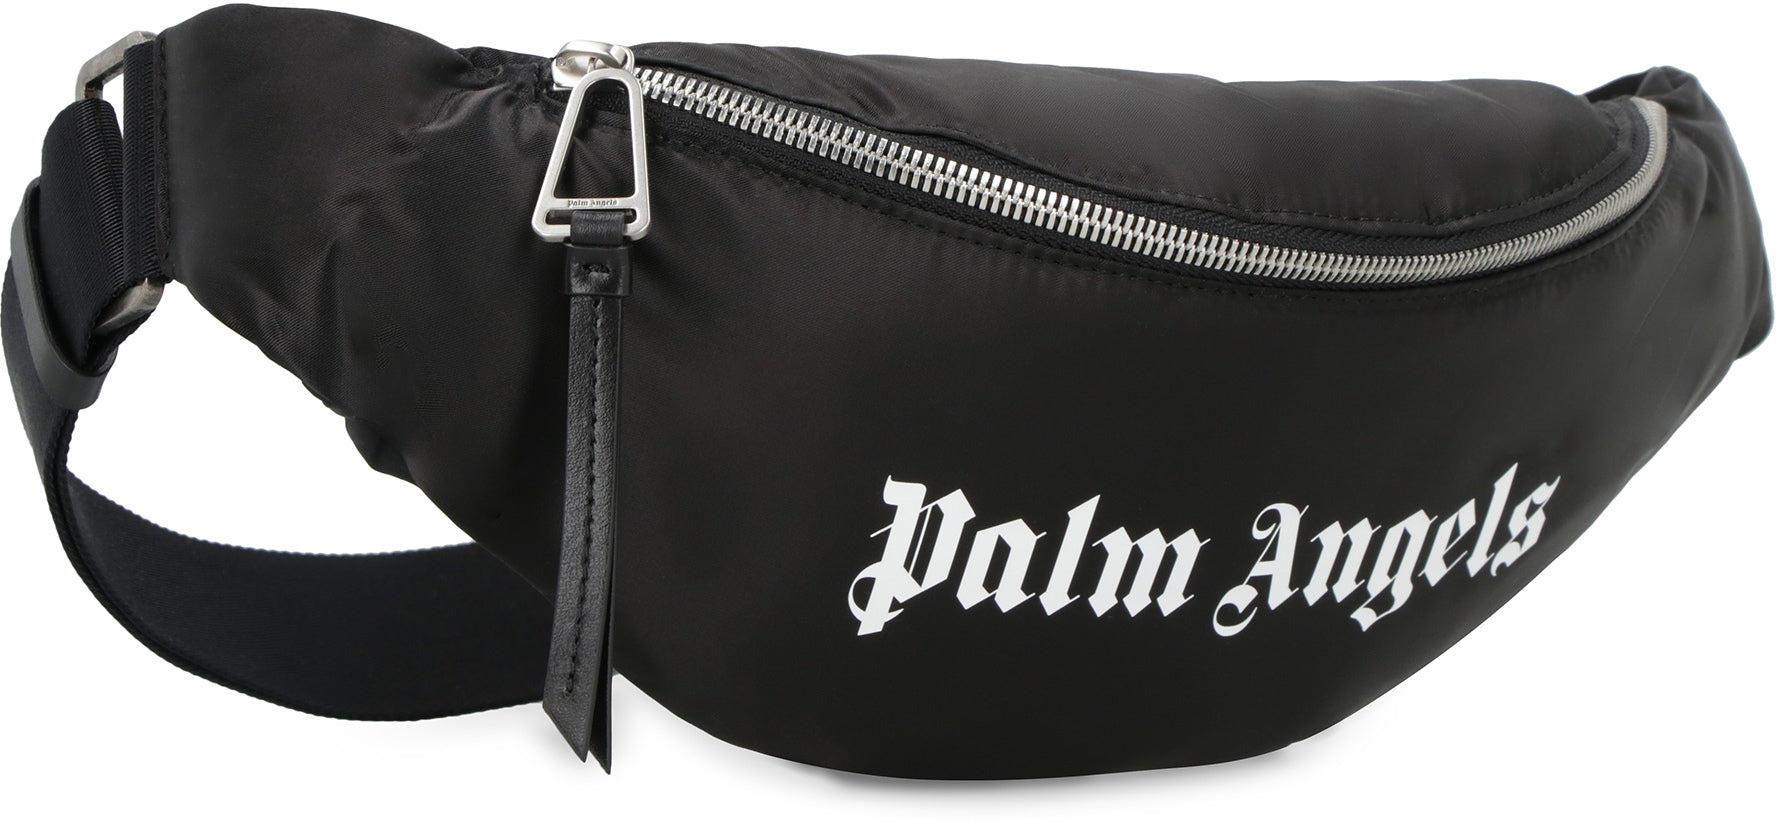 激安特価特売 PALM ANGELS Metallic Waist Bag | artfive.co.jp